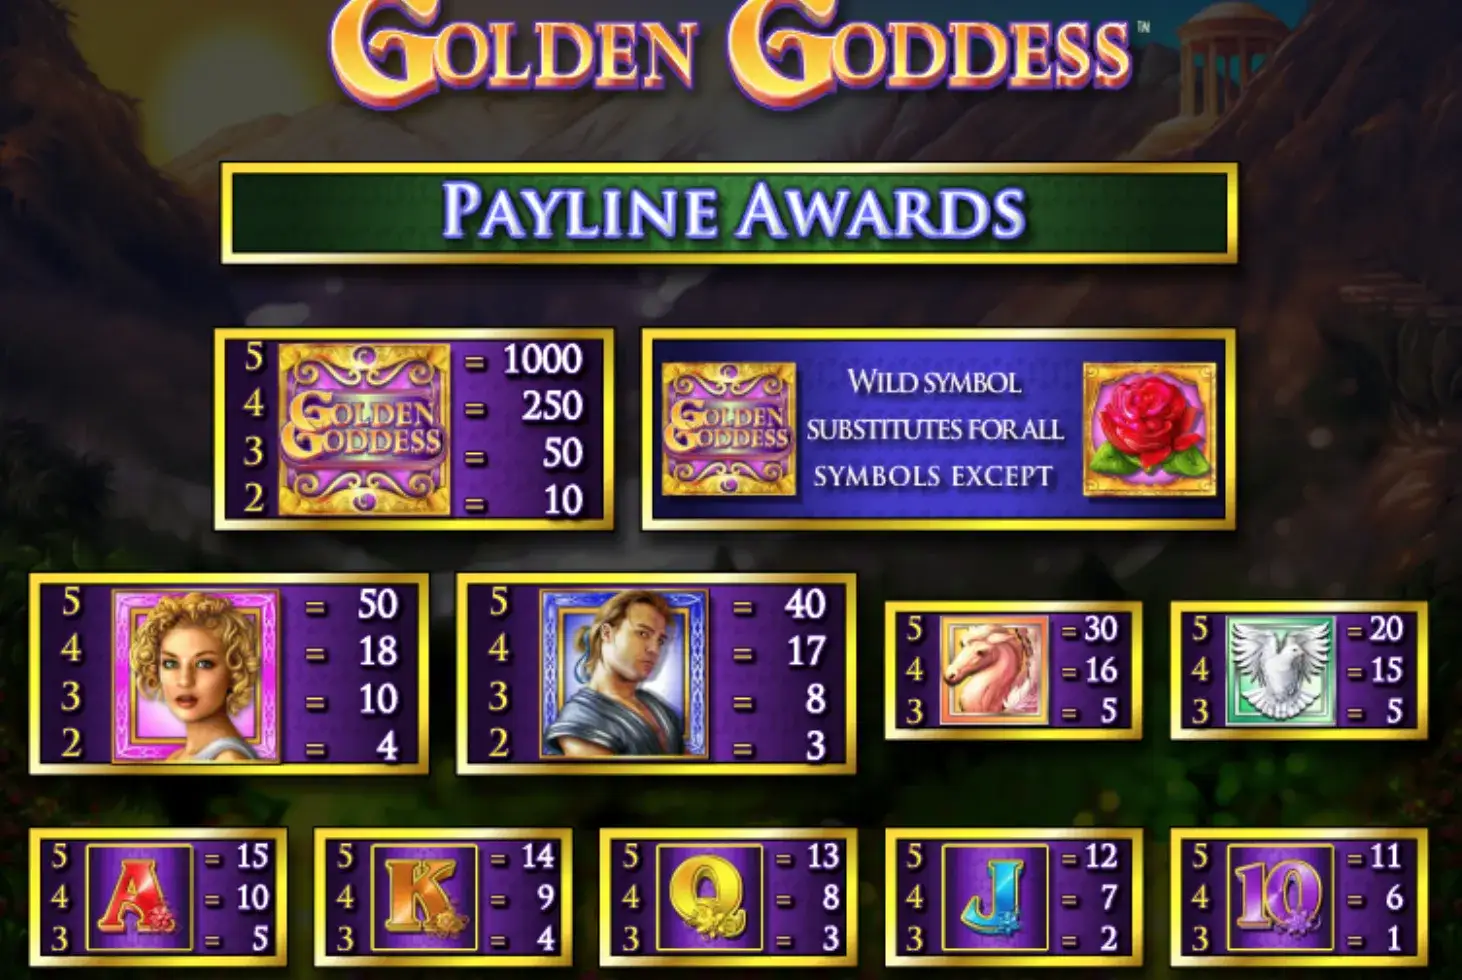 Tabla pagos Golden Goddess